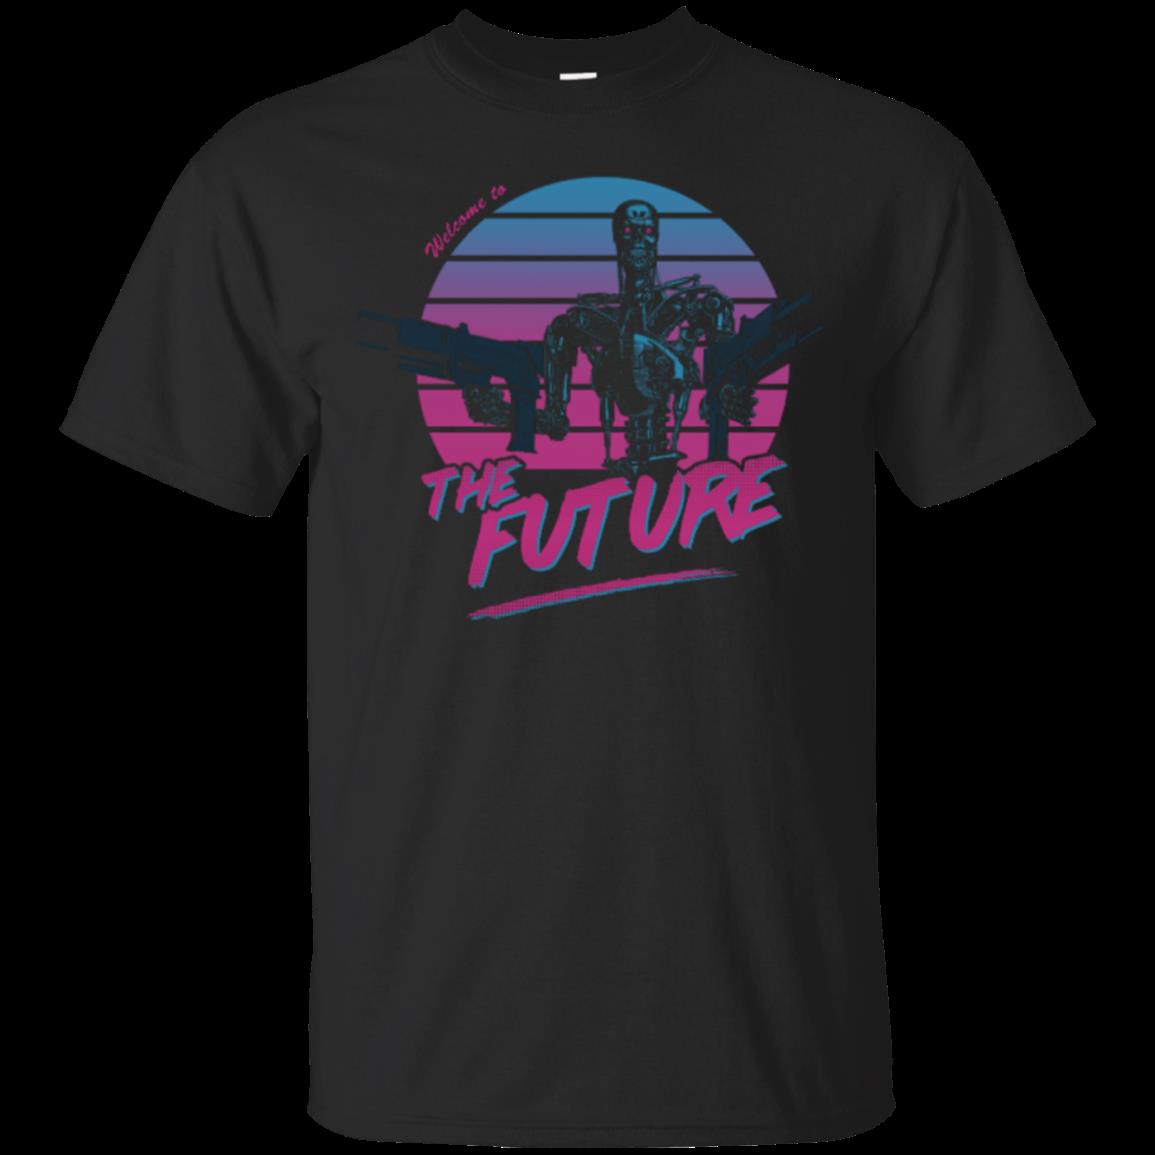 The Terminator Shirts Welcome To The Future T Shirt Hoodies Sweatshirt